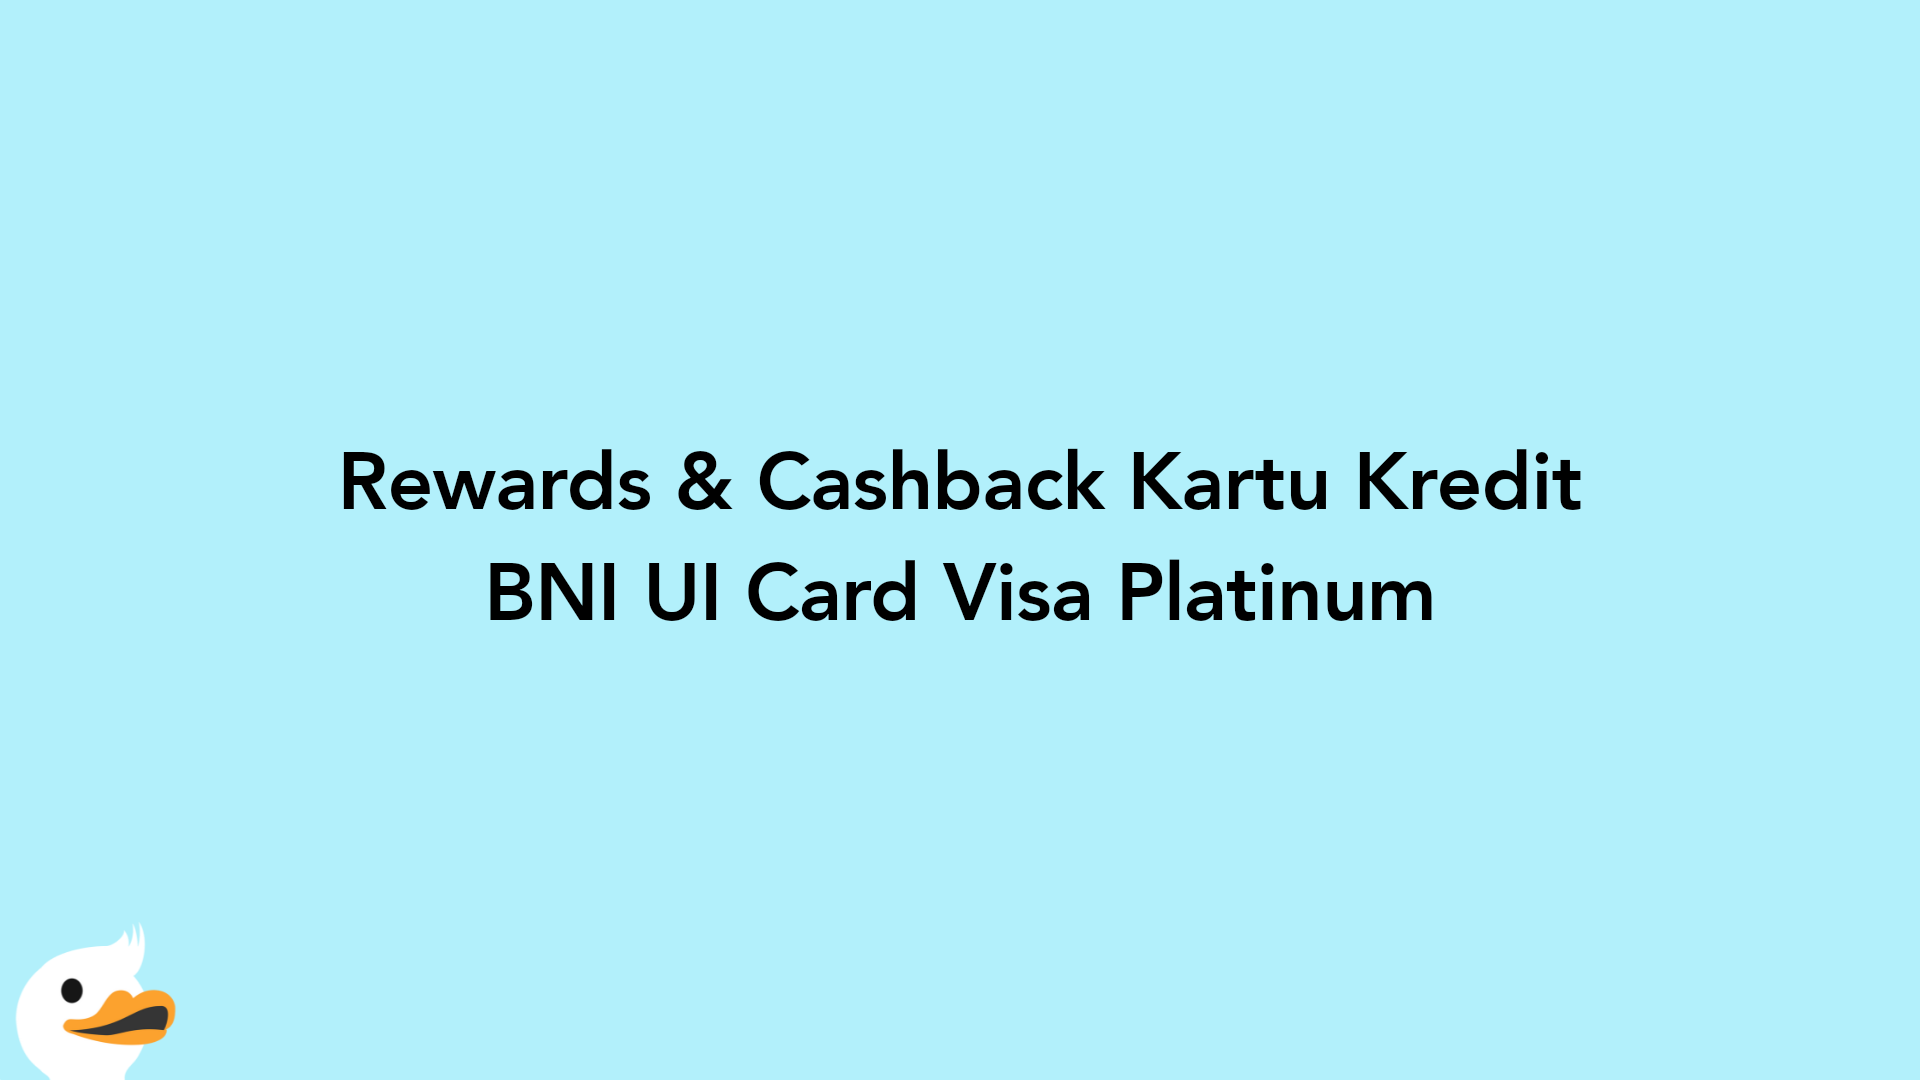 Rewards & Cashback Kartu Kredit BNI UI Card Visa Platinum